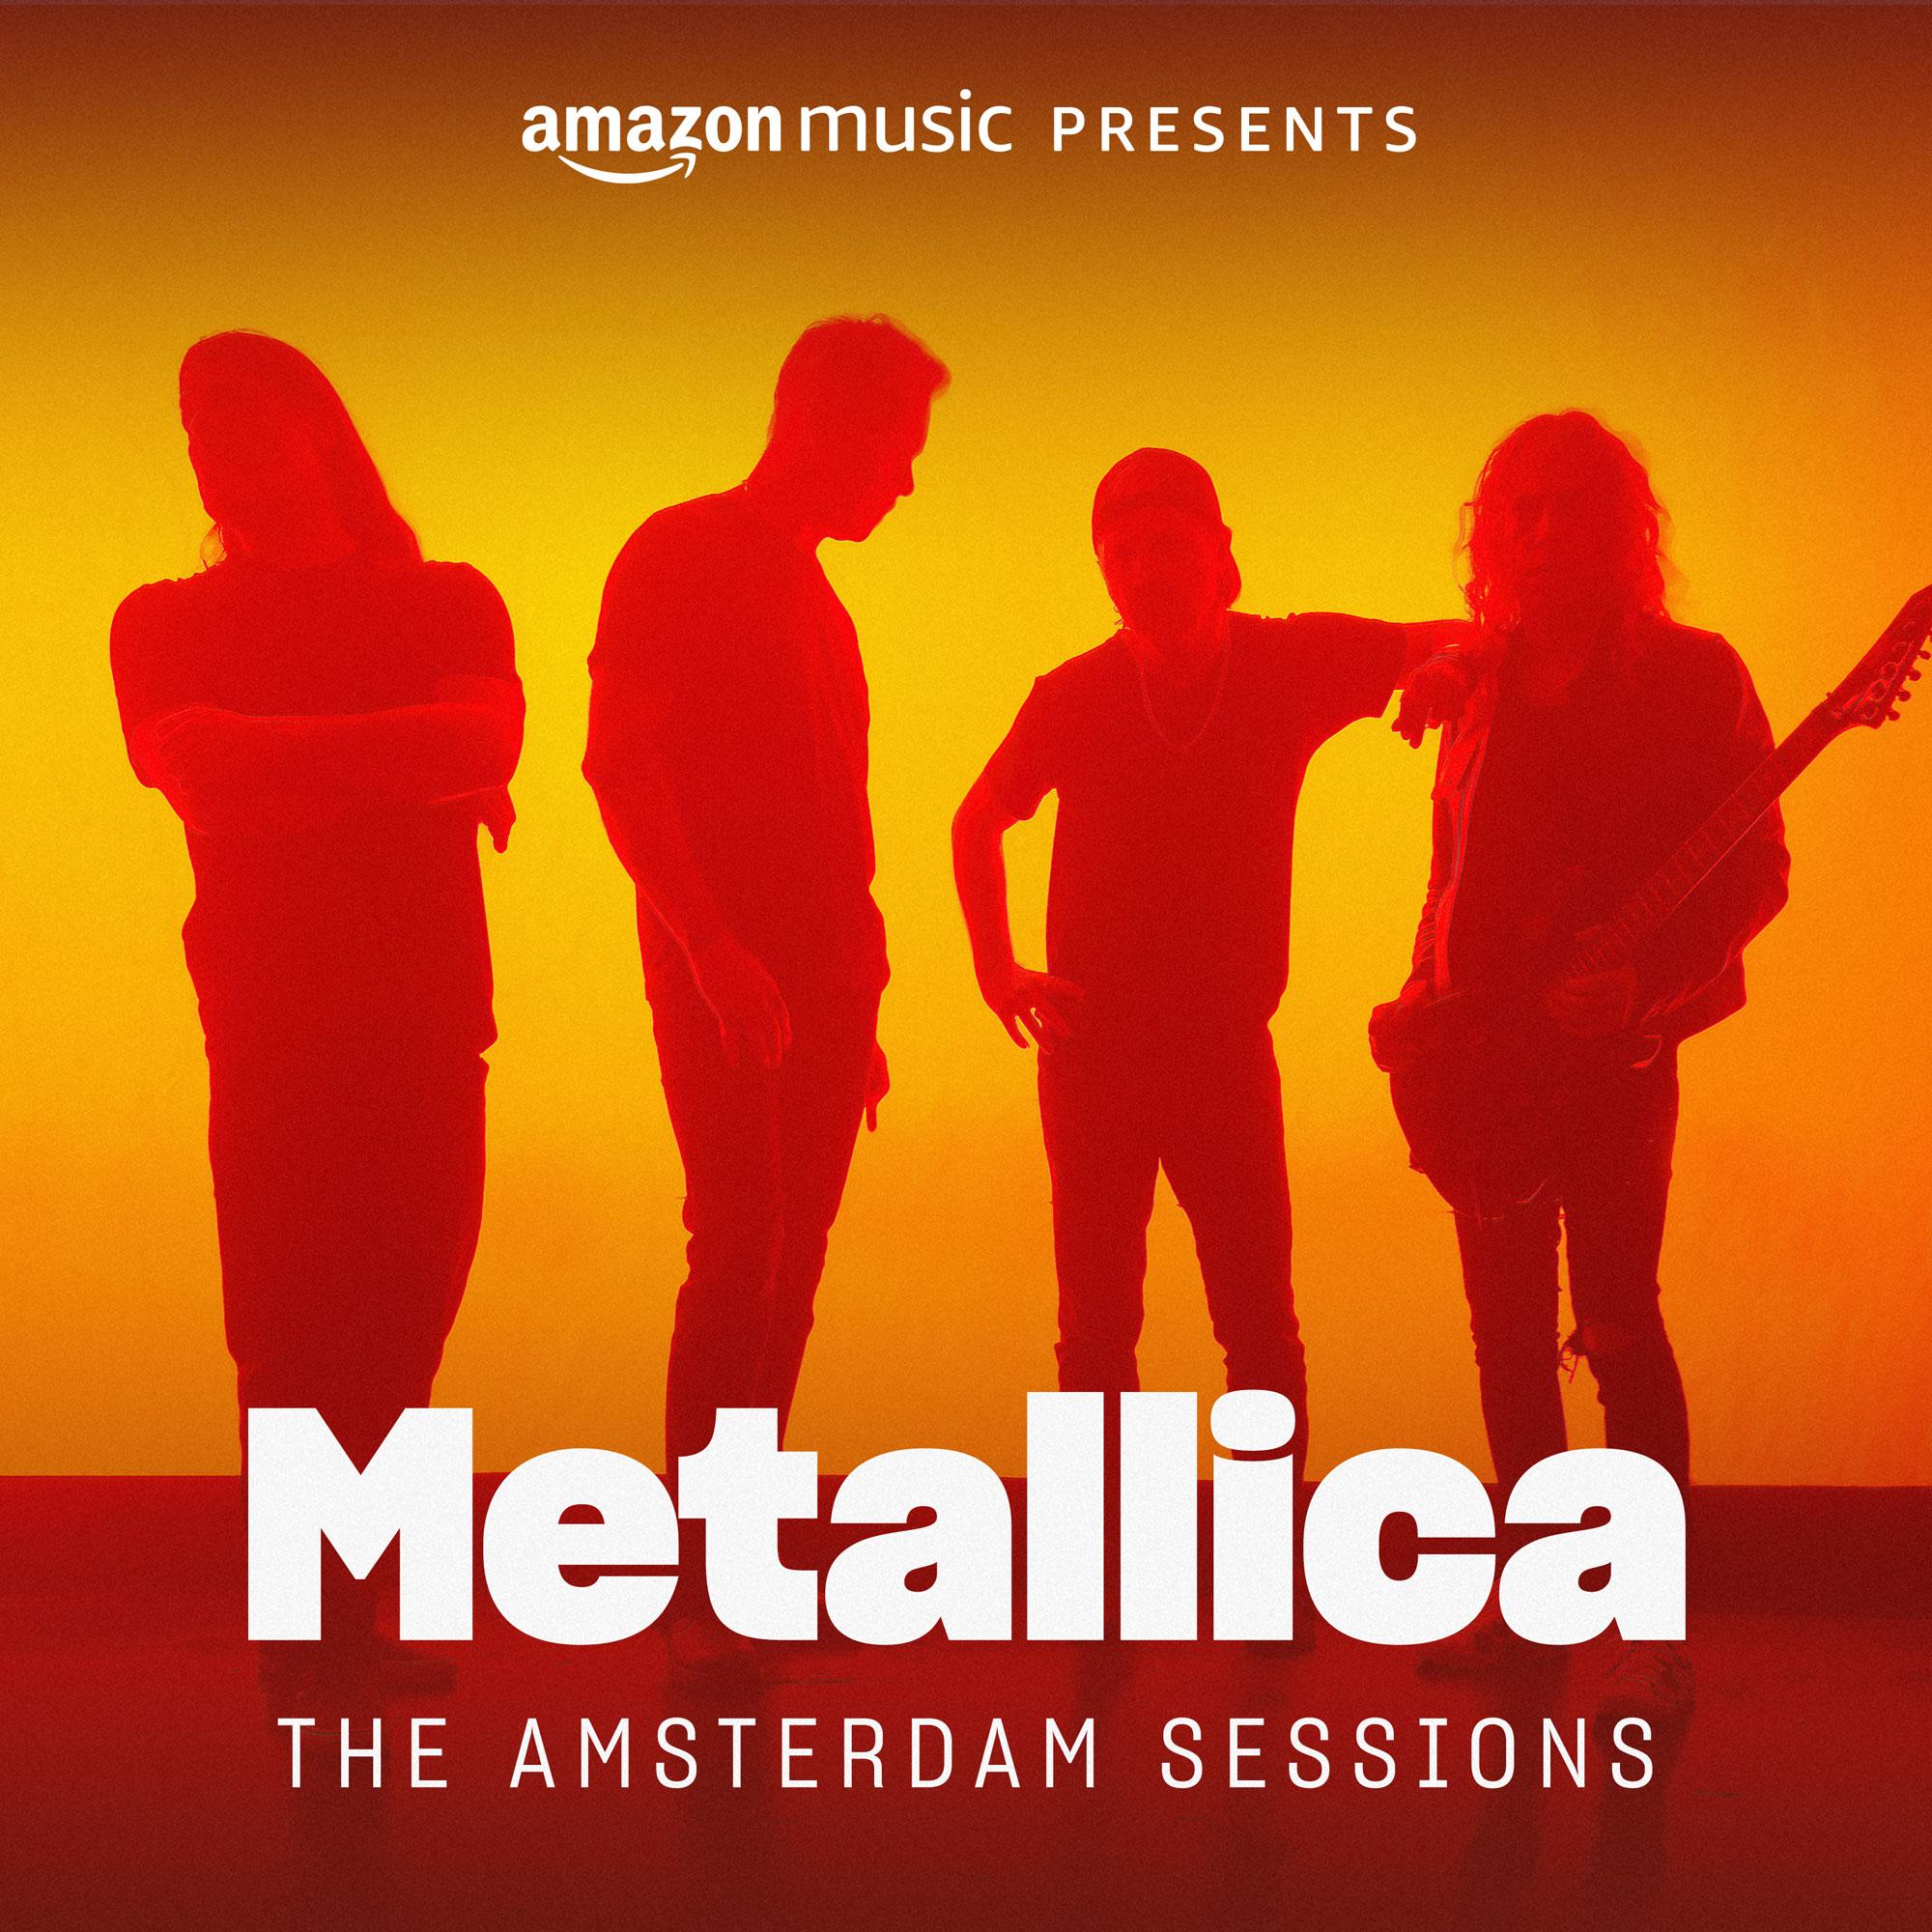 The Amsterdam Sessions (Amazon Music Presents) Album Cover